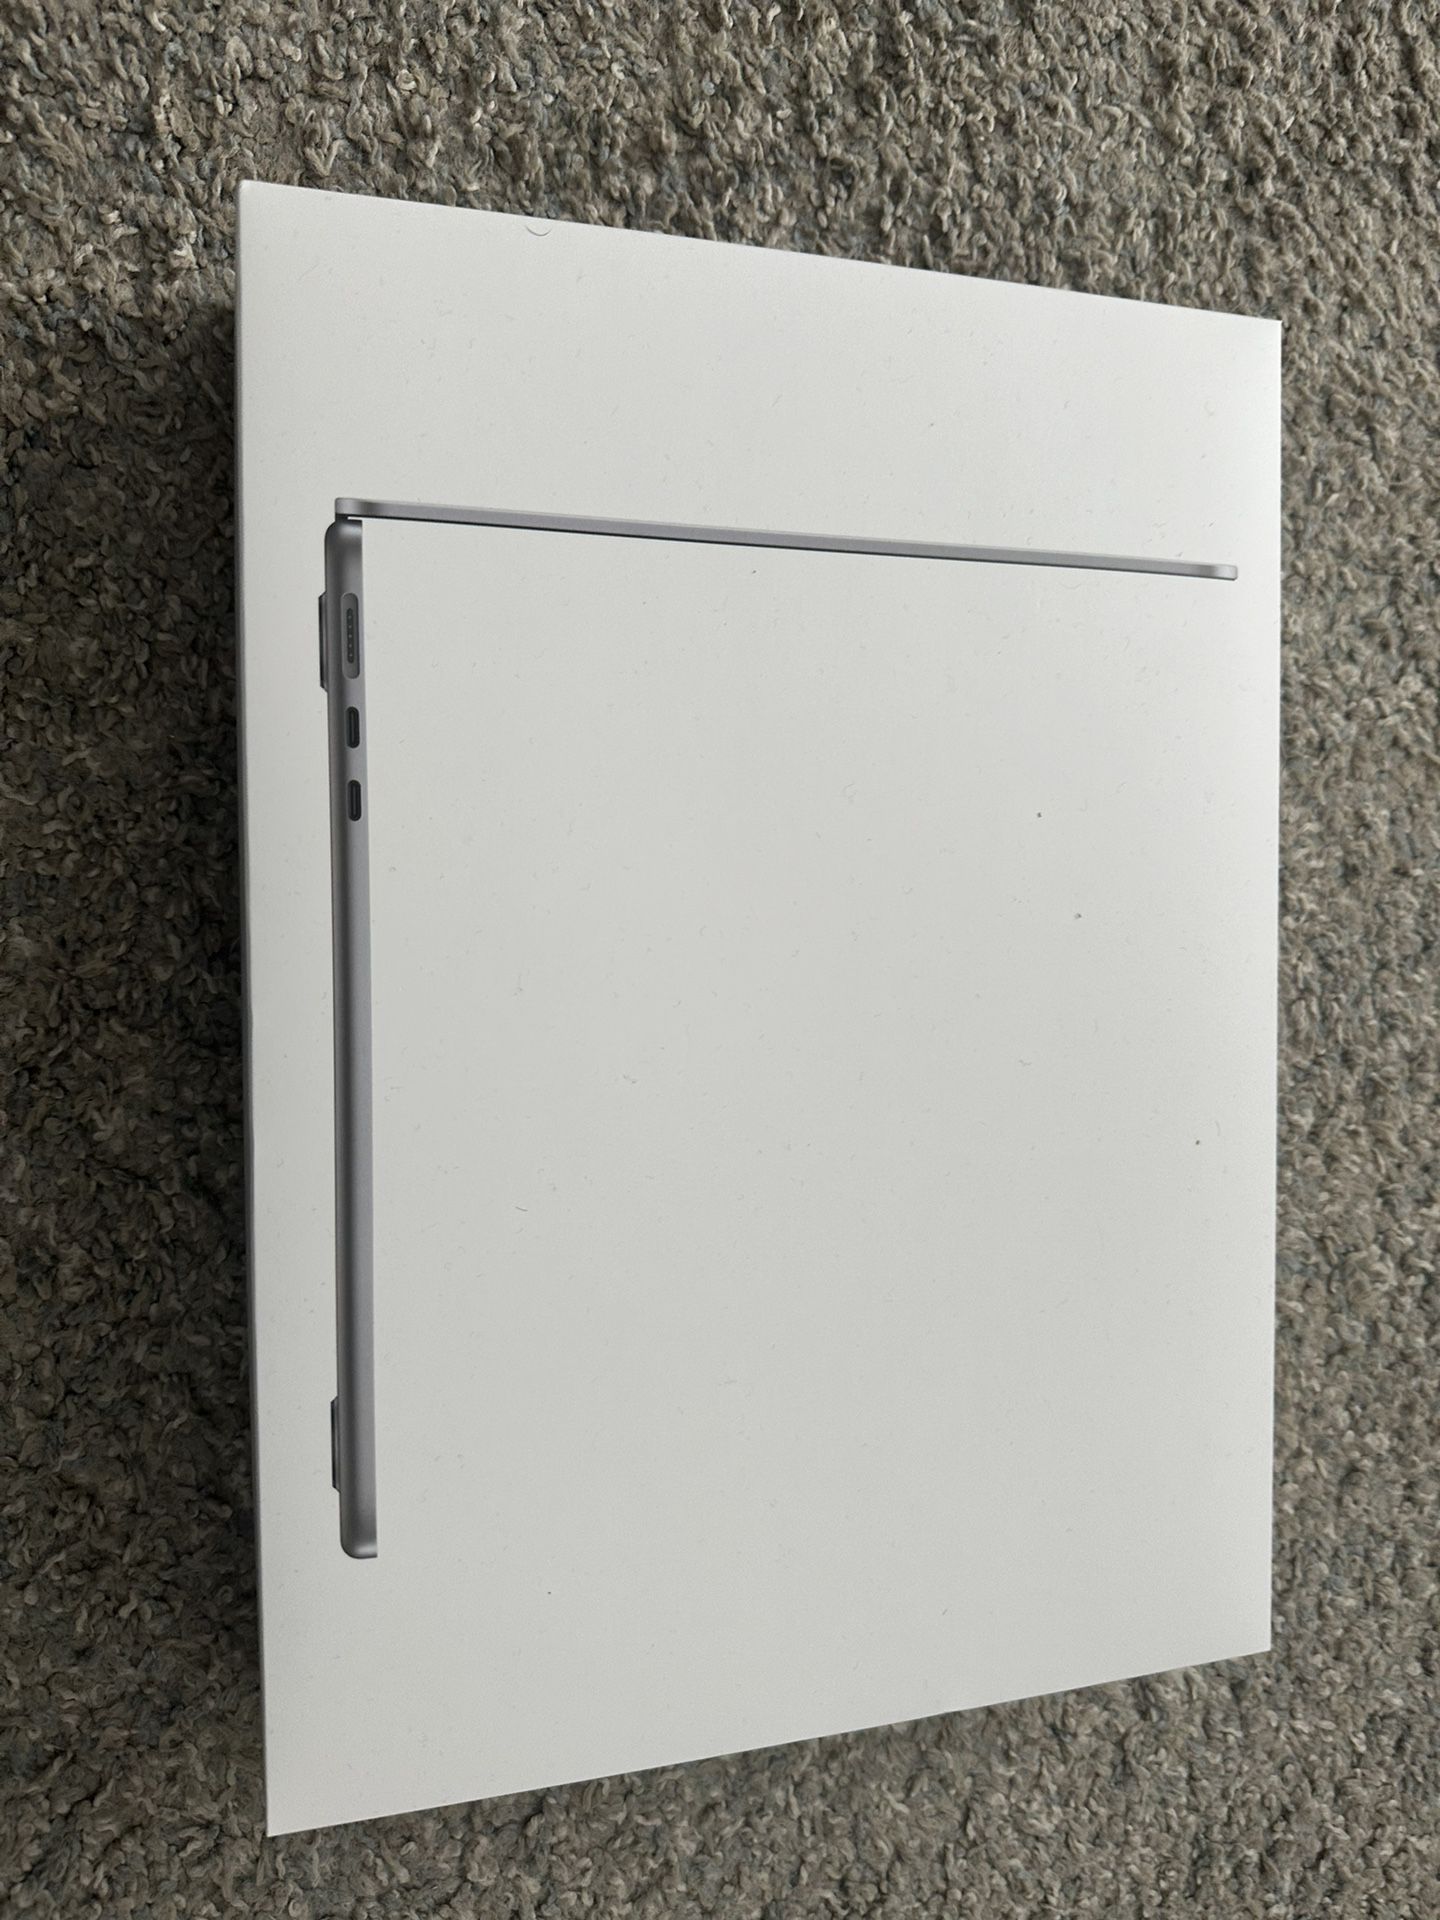 M2 MacBook Air Box Only 